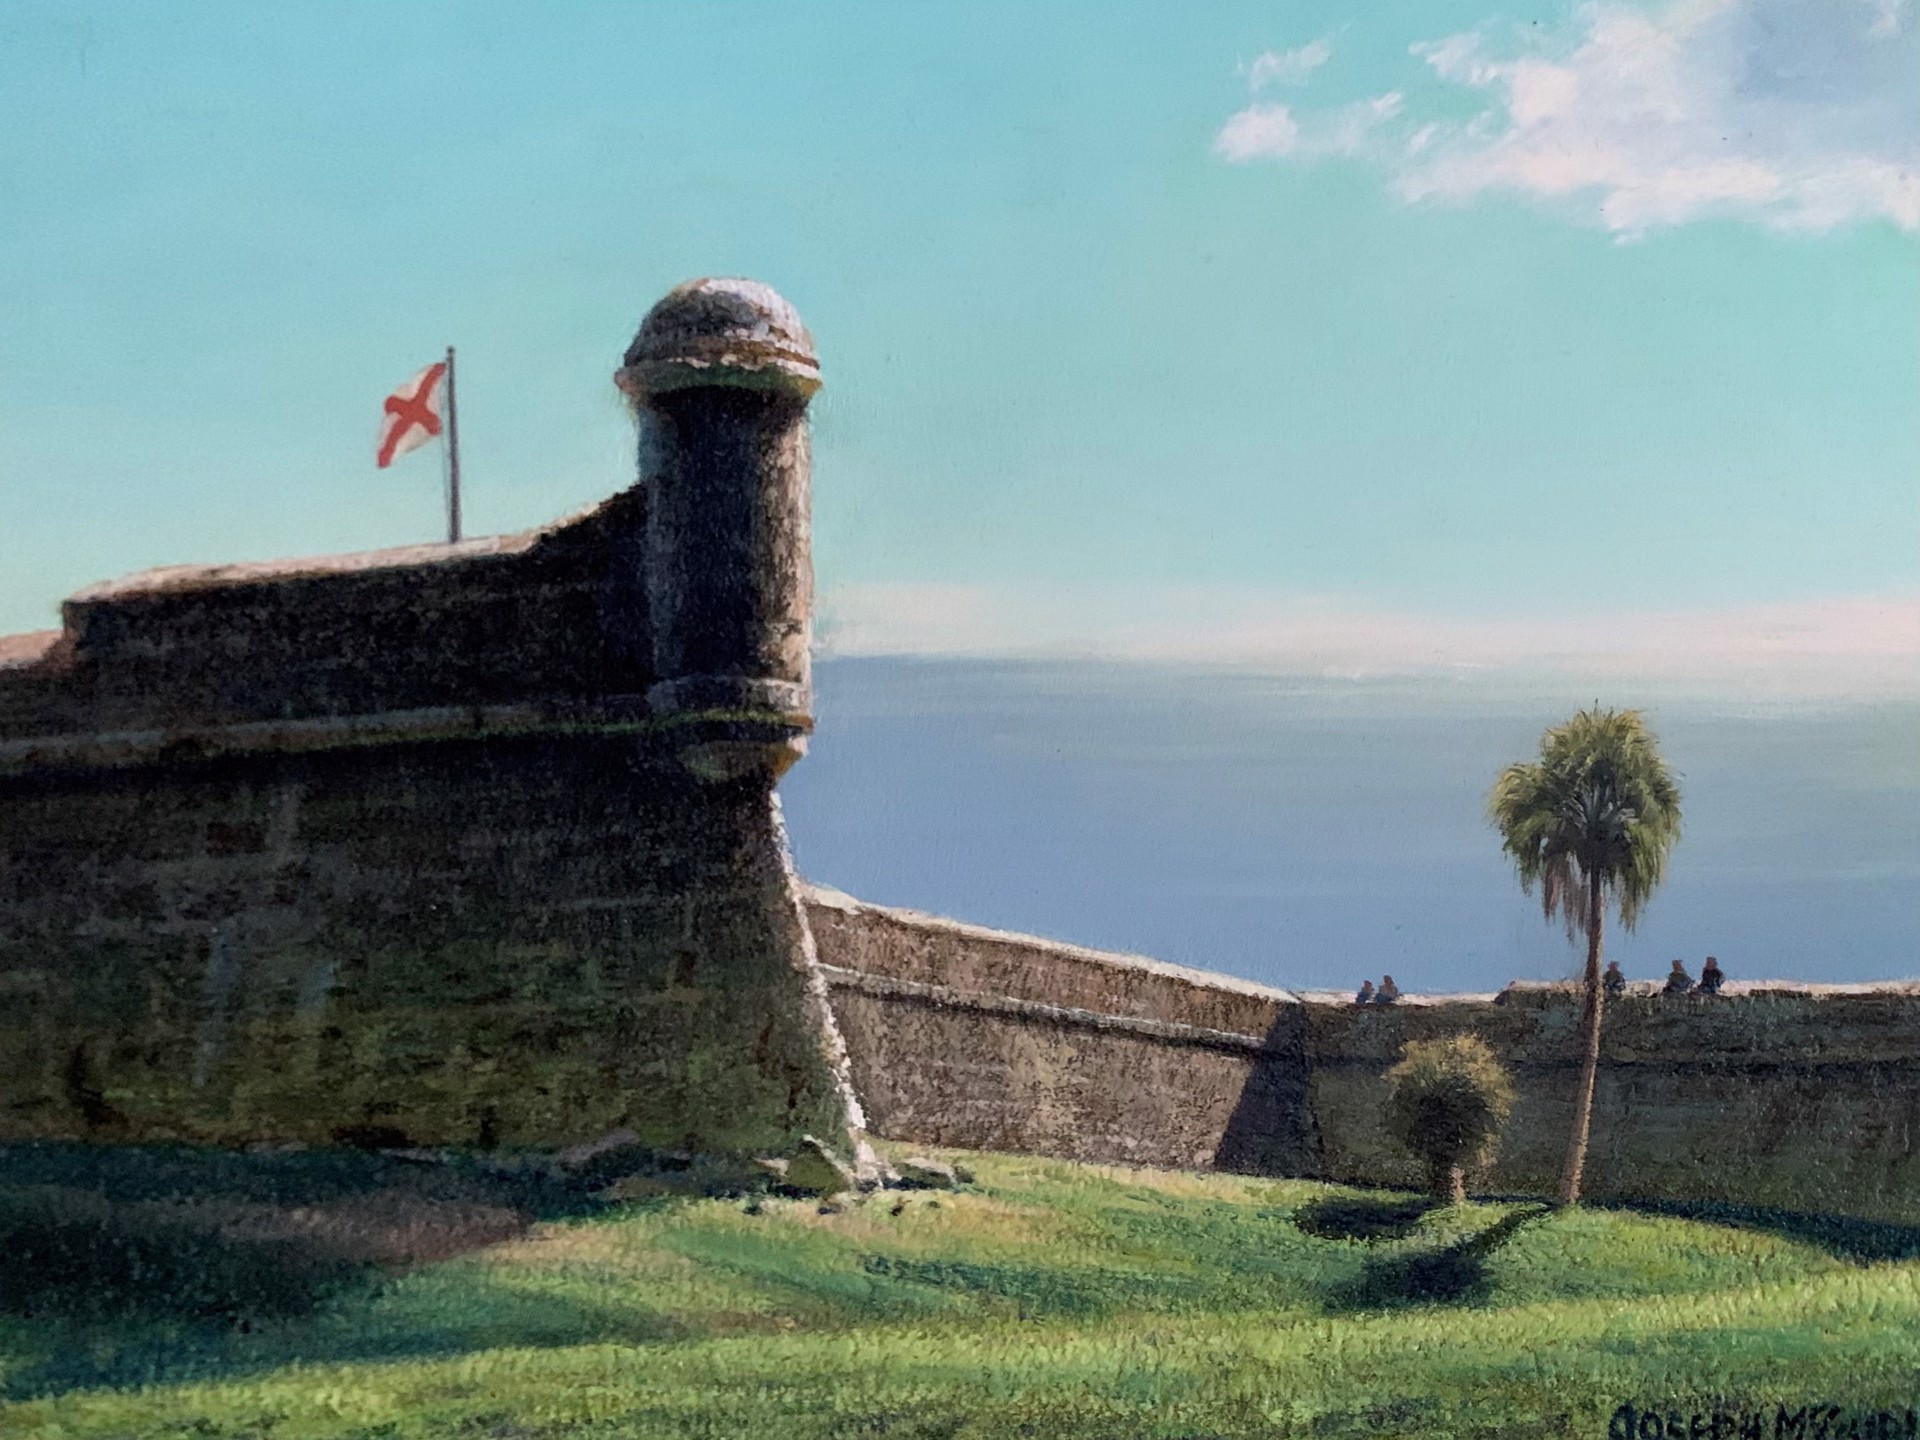 St. Augustine Fort by Joseph McGurl